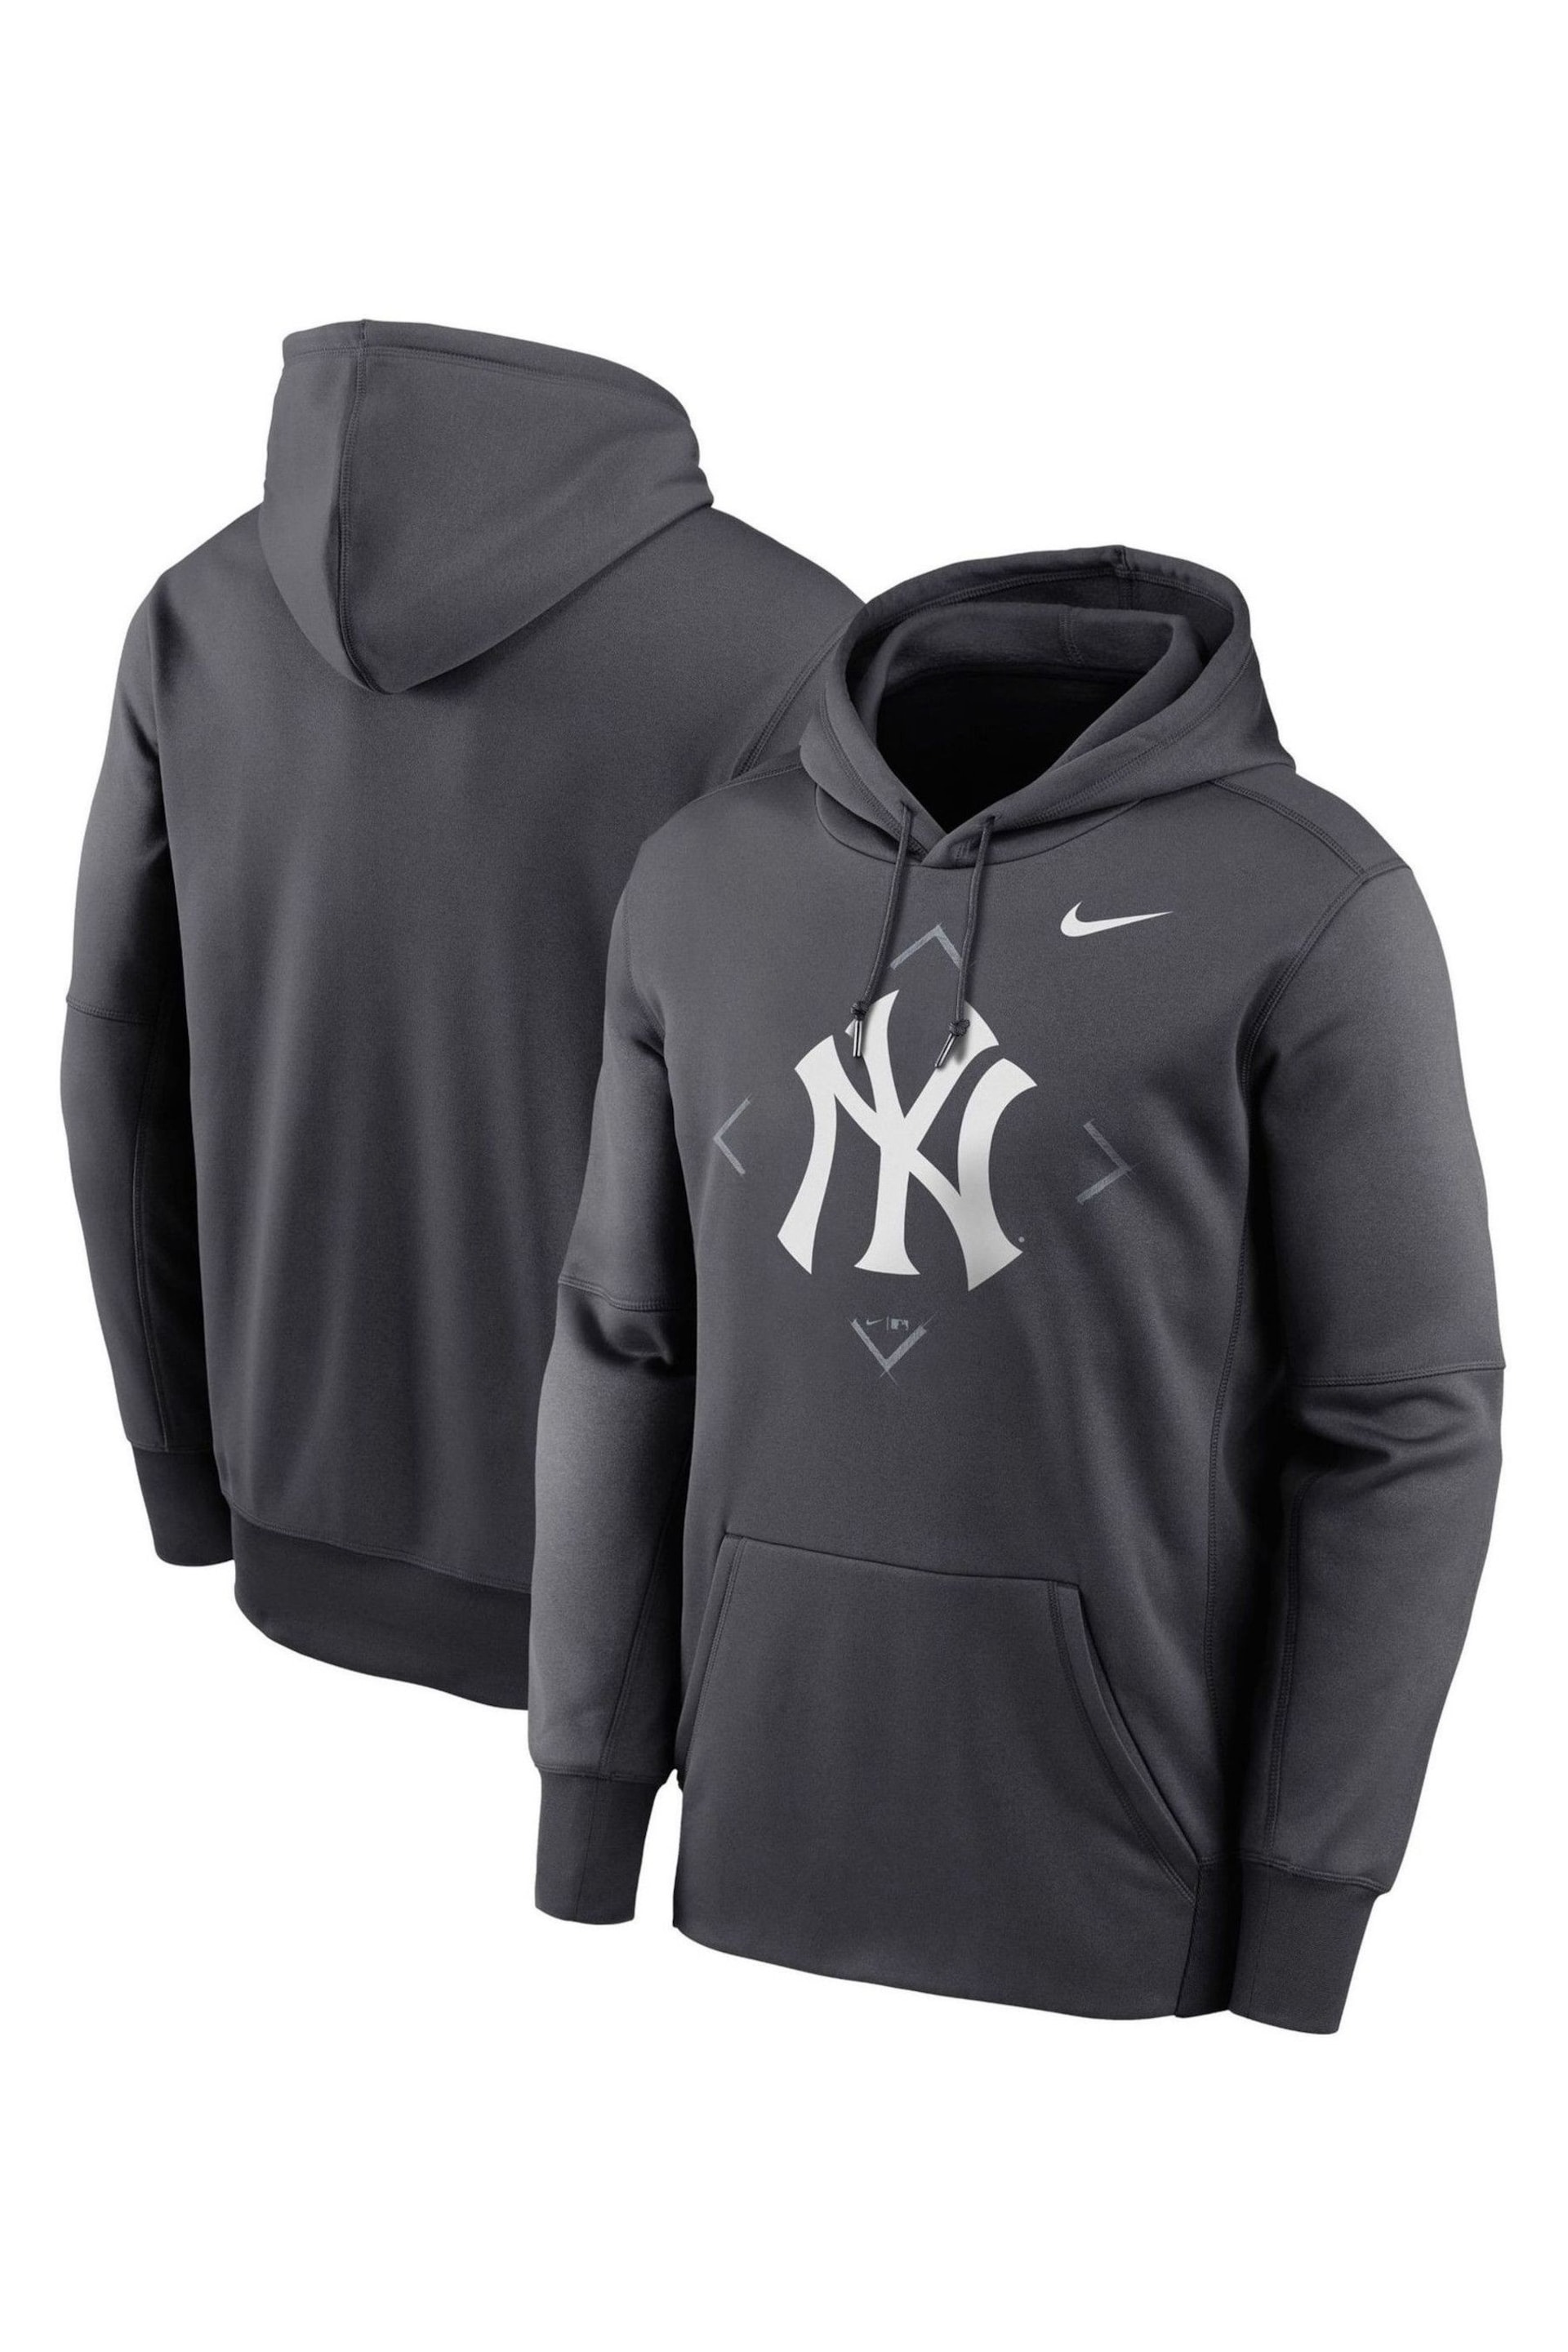 Nike Grey New York Yankees Therma Icon Performance Fleece Pullover Hoodie - Image 1 of 3